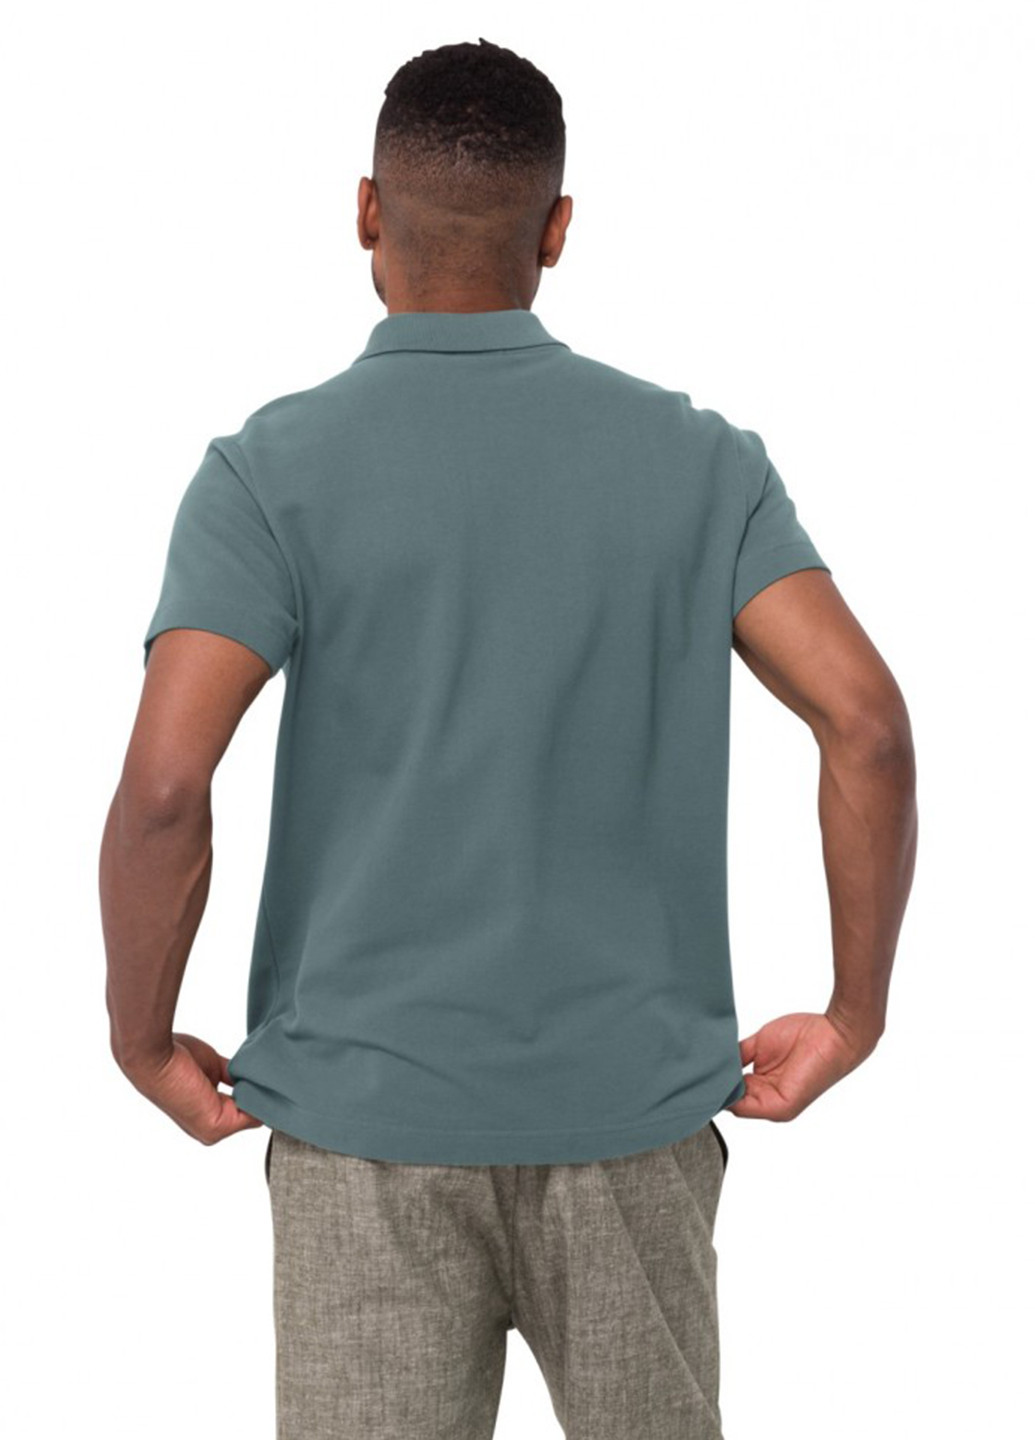 Голубой футболка-поло для мужчин Jack Wolfskin с логотипом